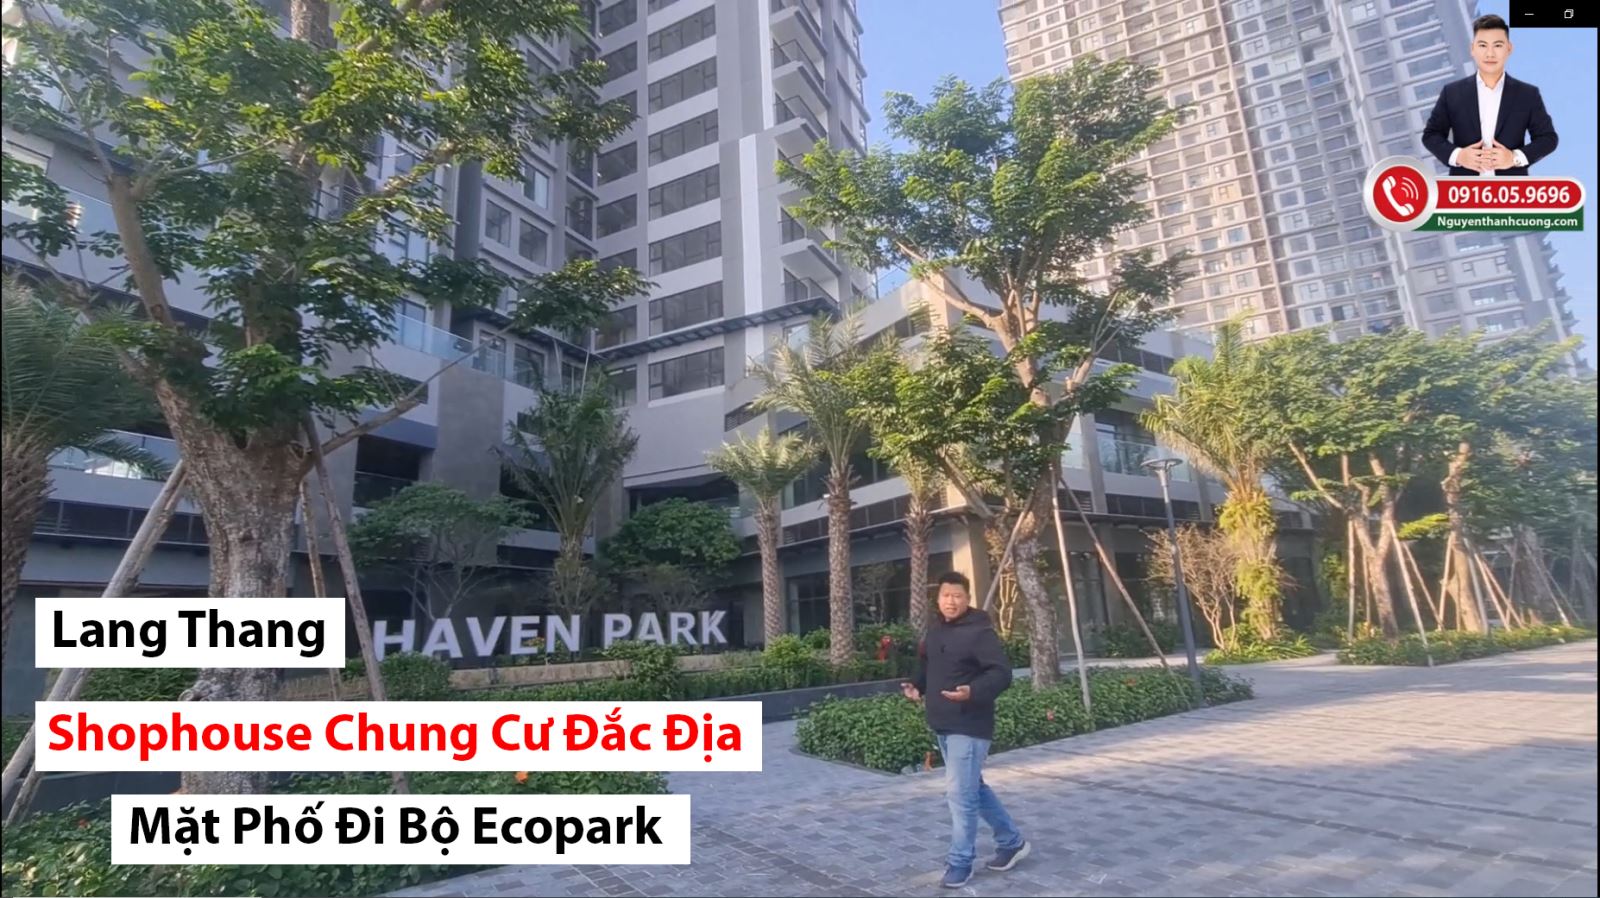 Shophouse Chung Cư Haven Park Ecopark